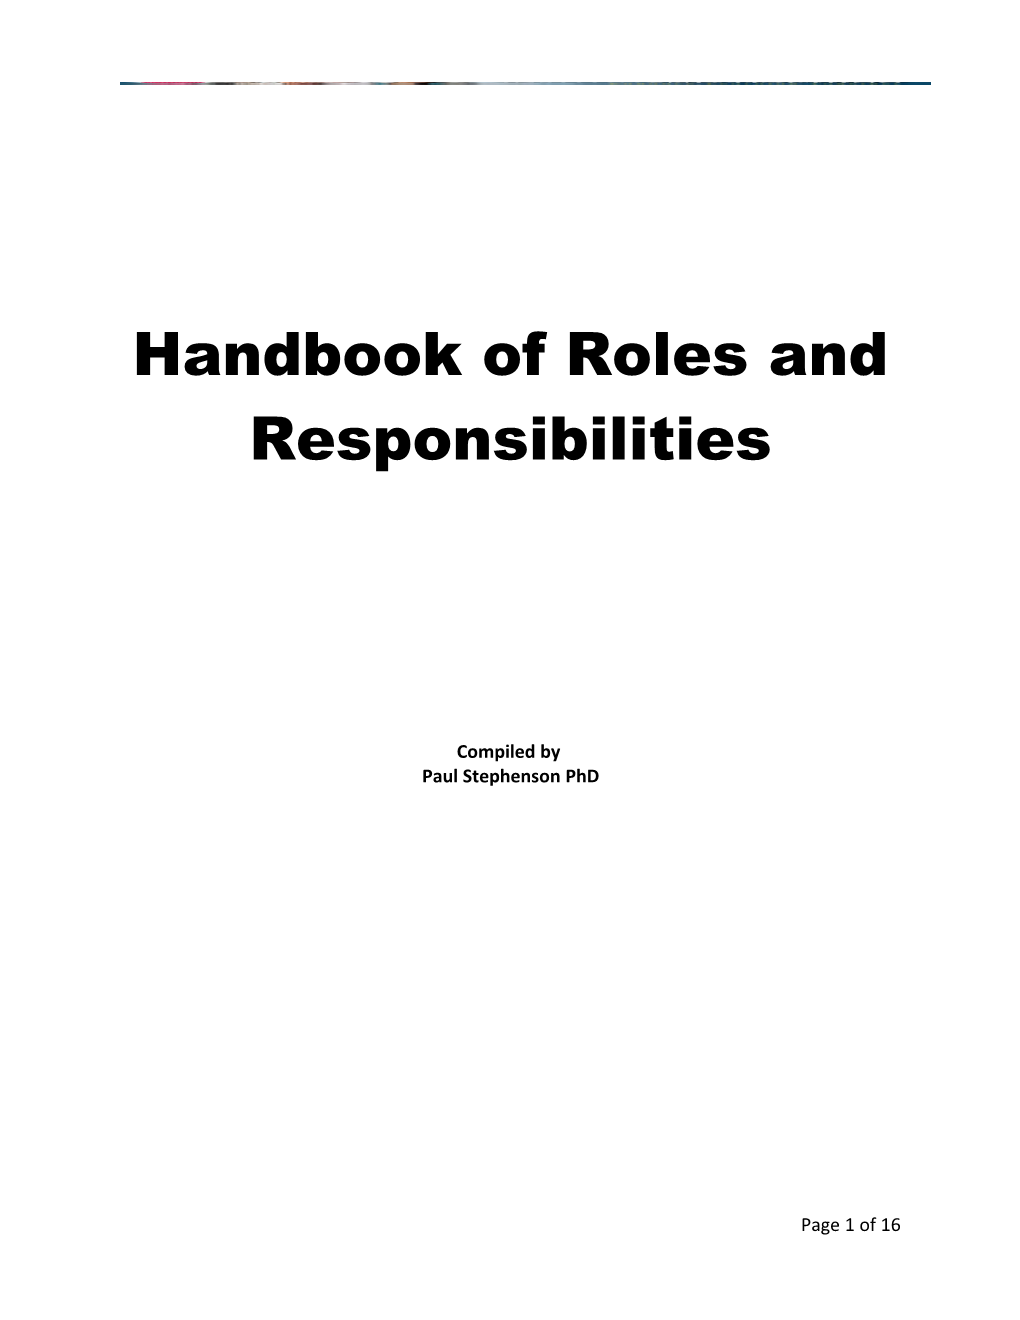 Handbook of Roles and Responsibilities